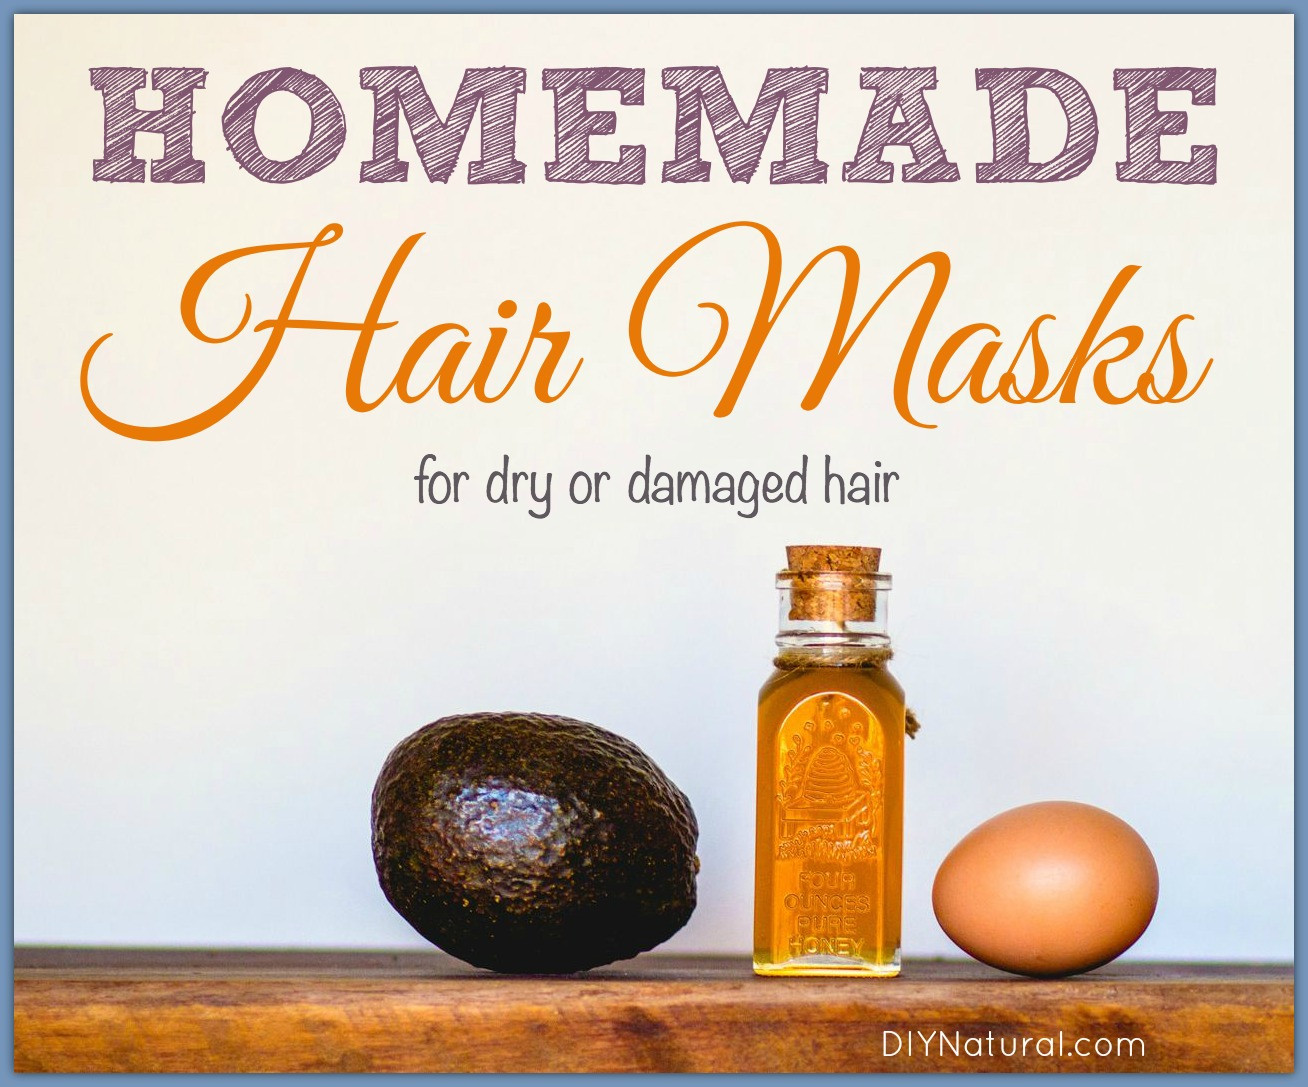 Hair Mask DIY
 Homemade Hair Mask Several Recipes for Dry or Damaged Hair